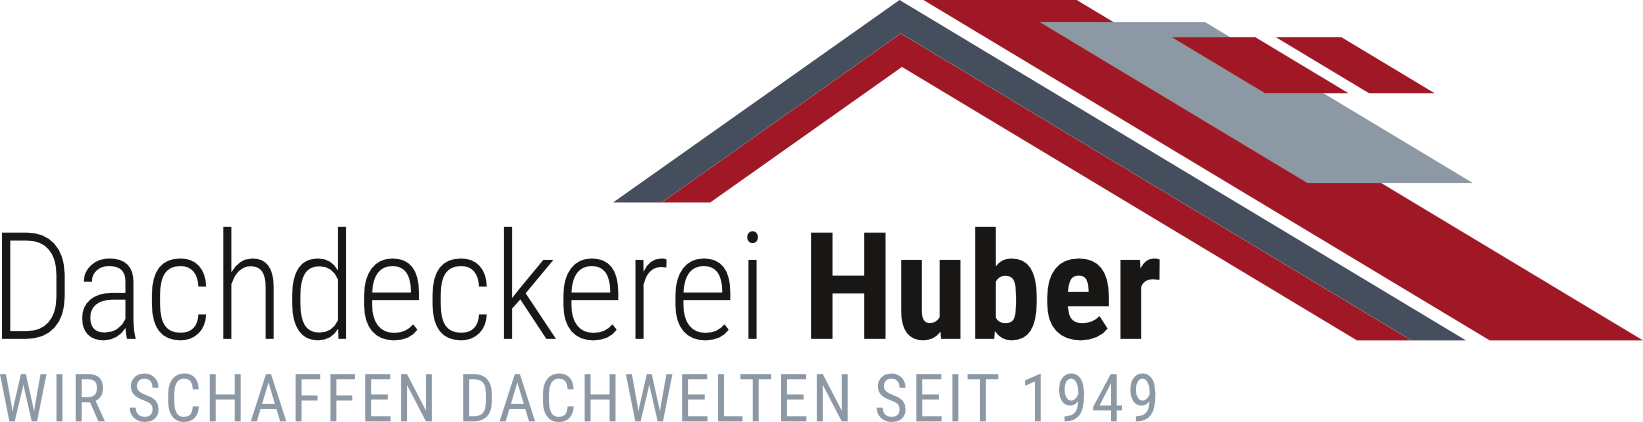 Dachdeckerei Huber GmbH